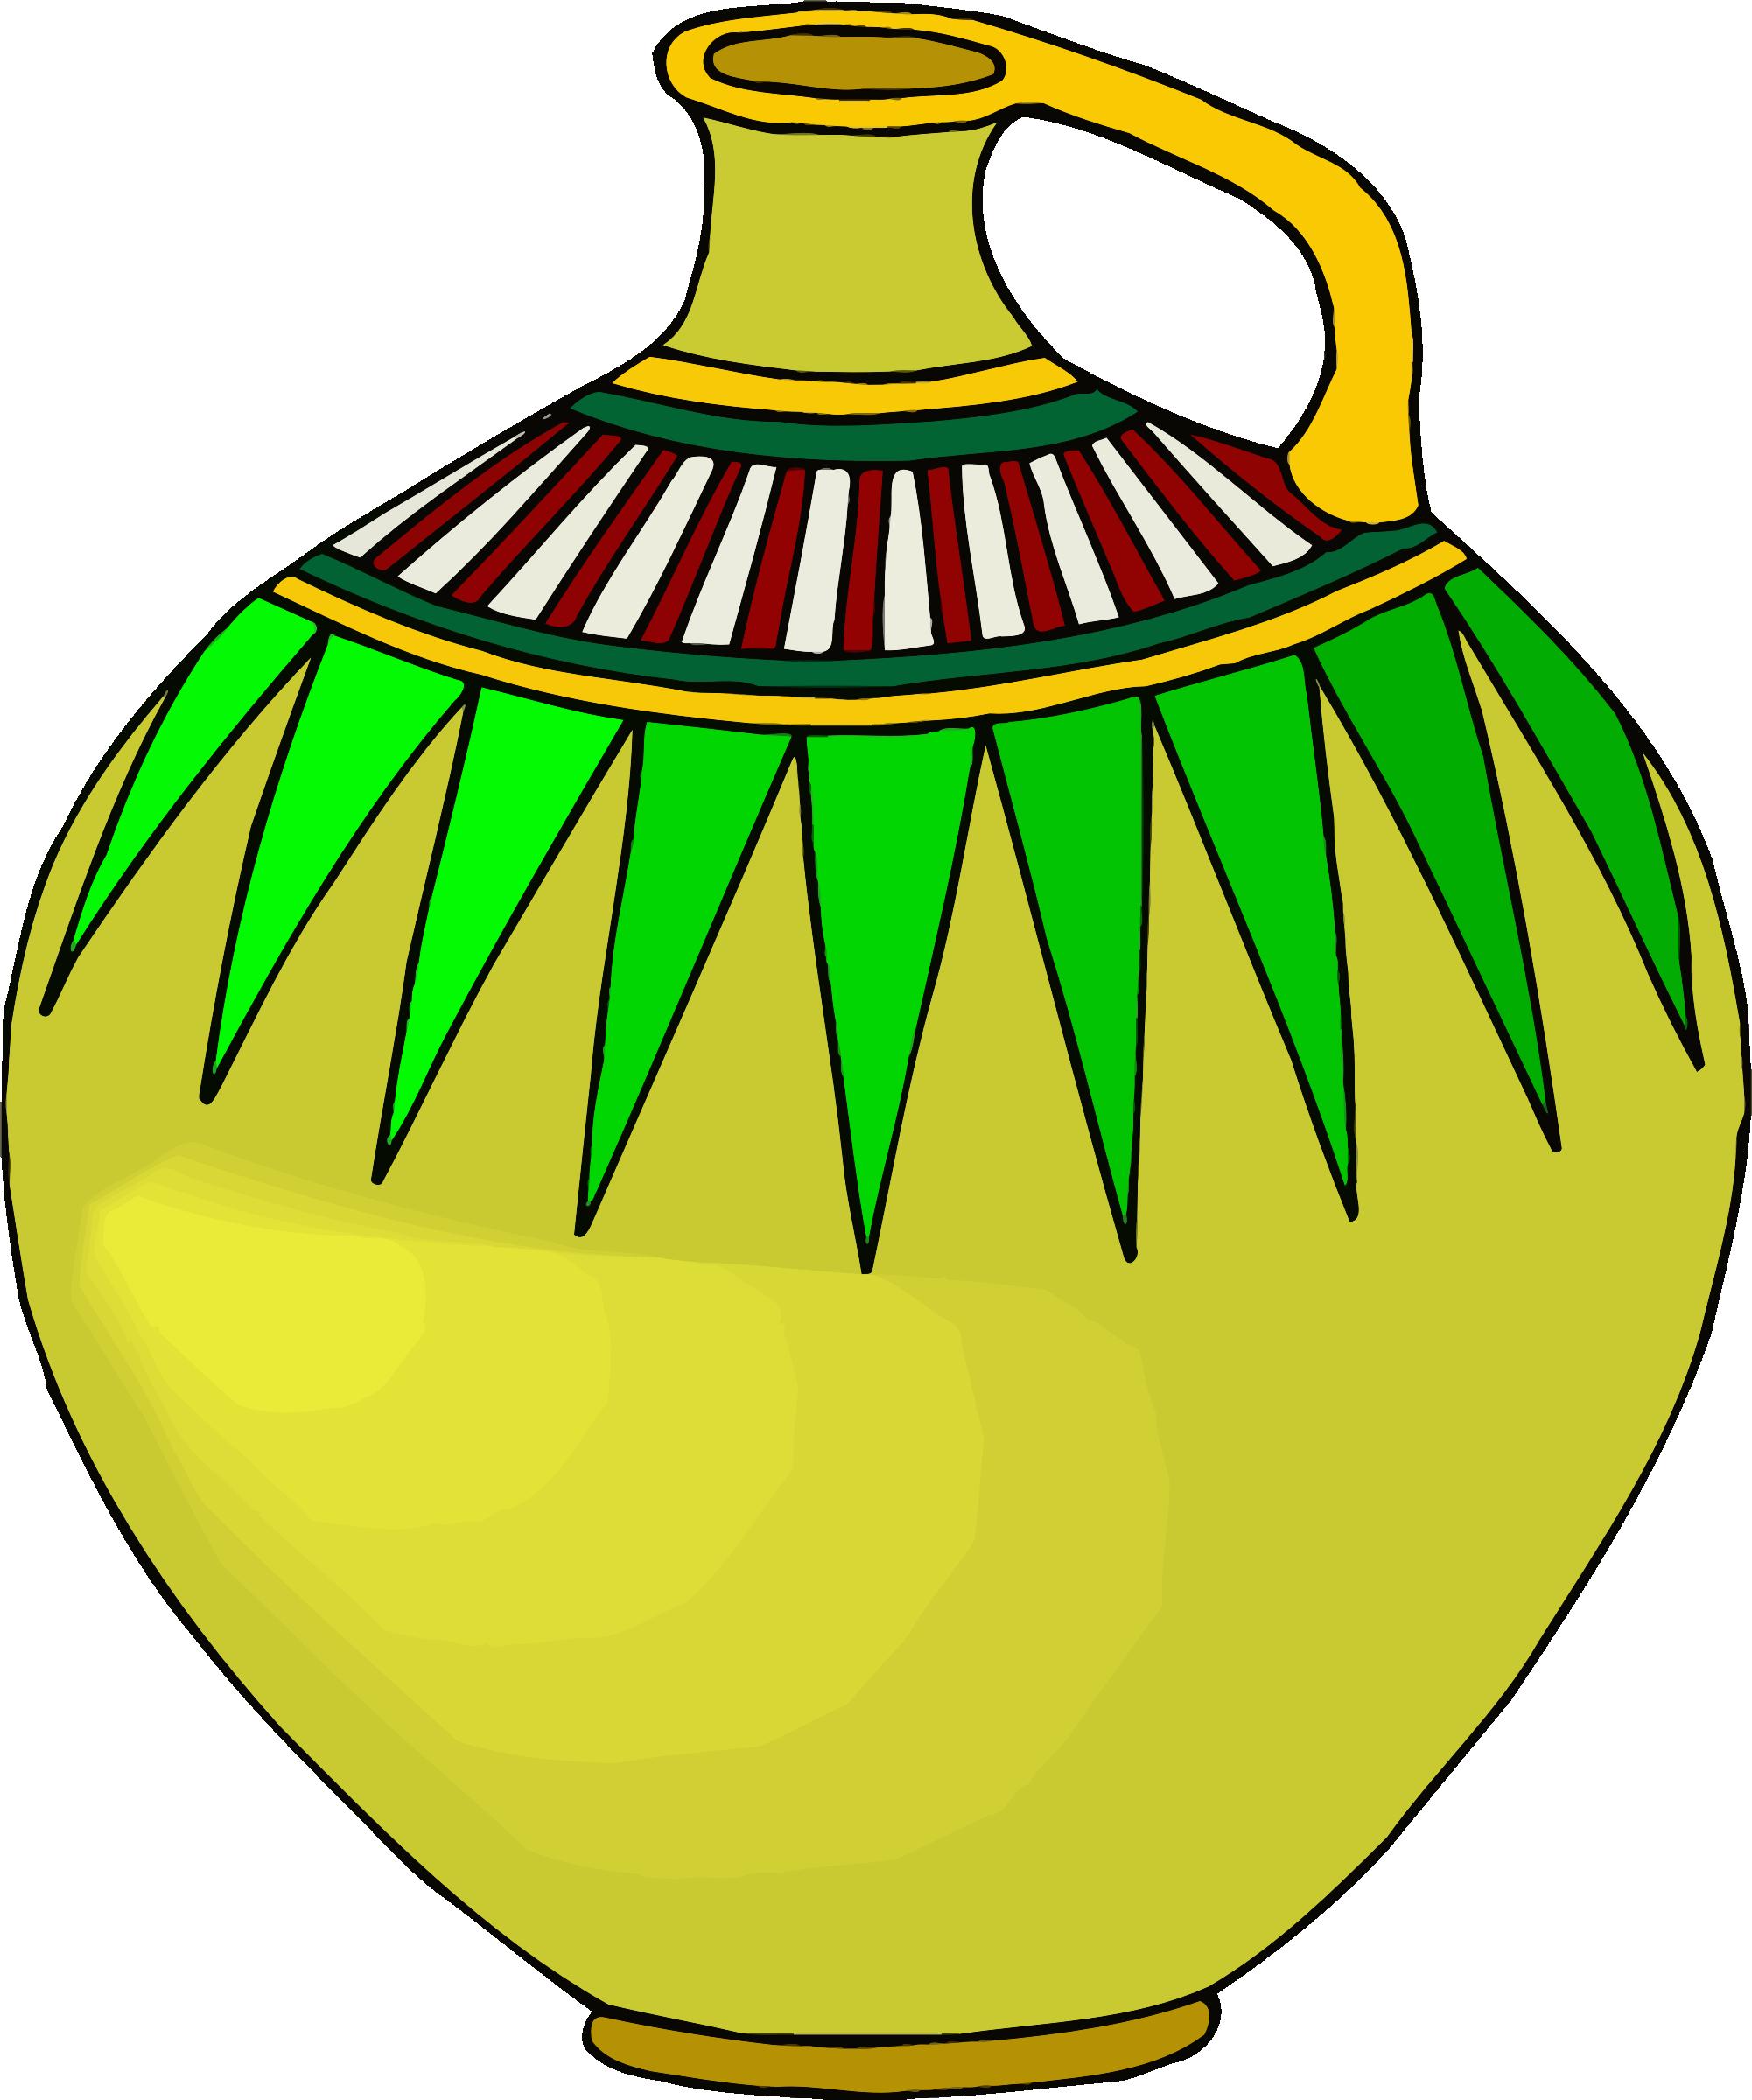 Simple vase icons